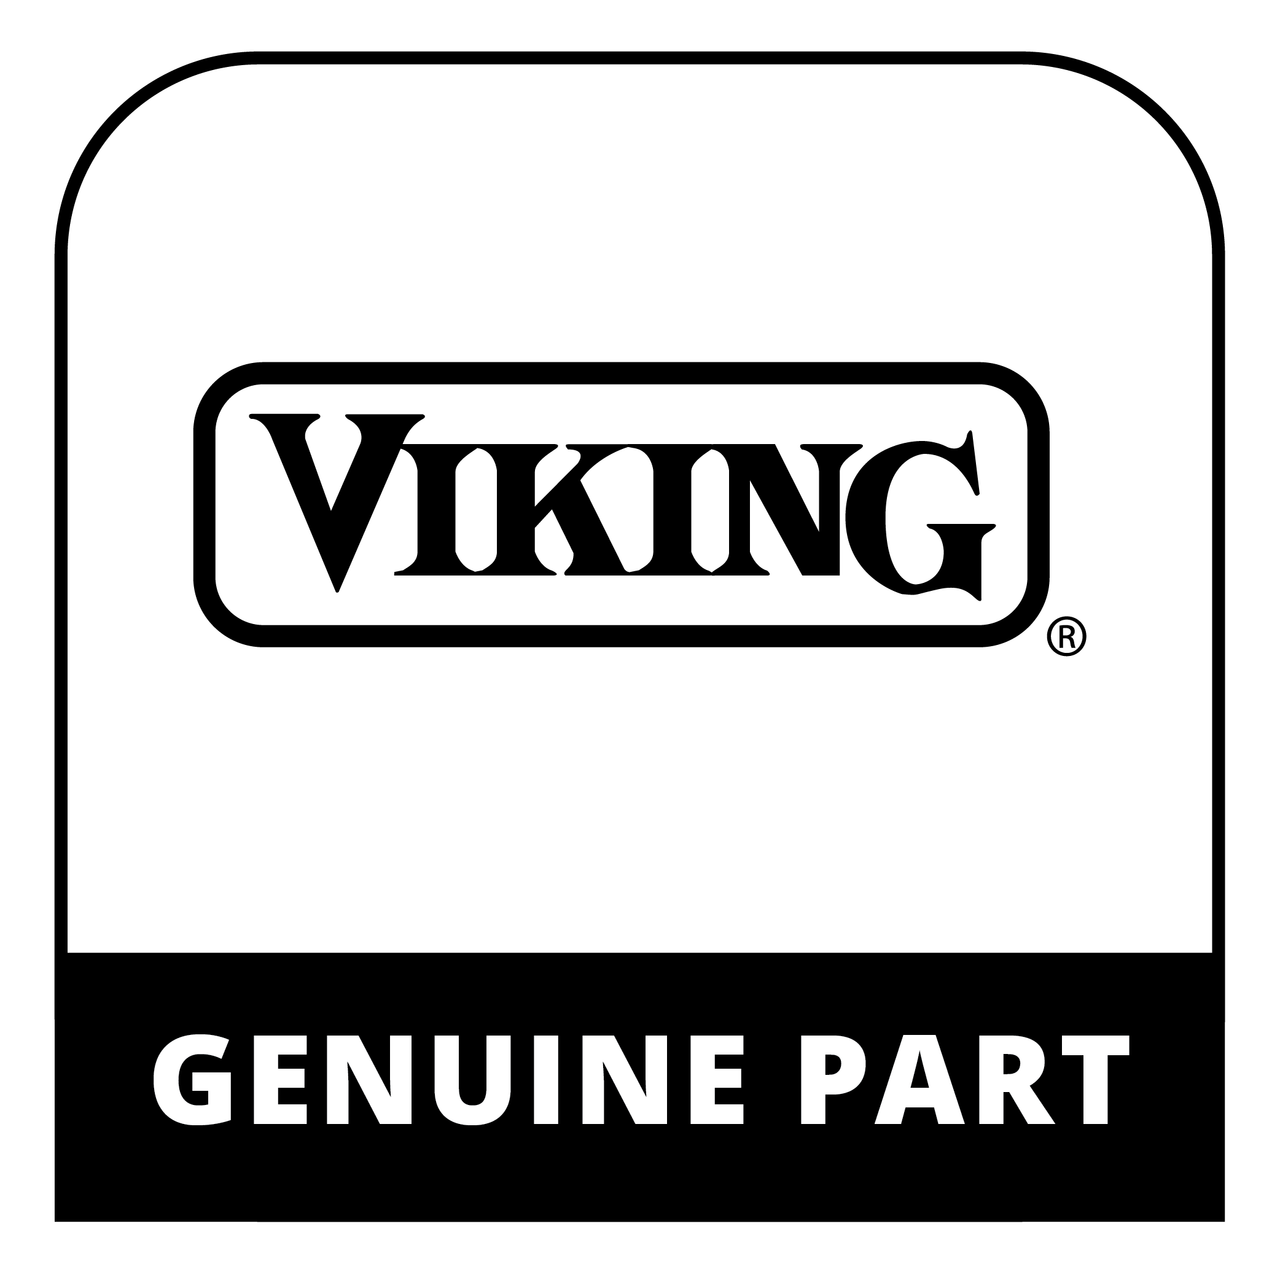 Viking 078967-2847 - Panel, Side, Lower, Lh - Blackforest Gre - Genuine Viking Part